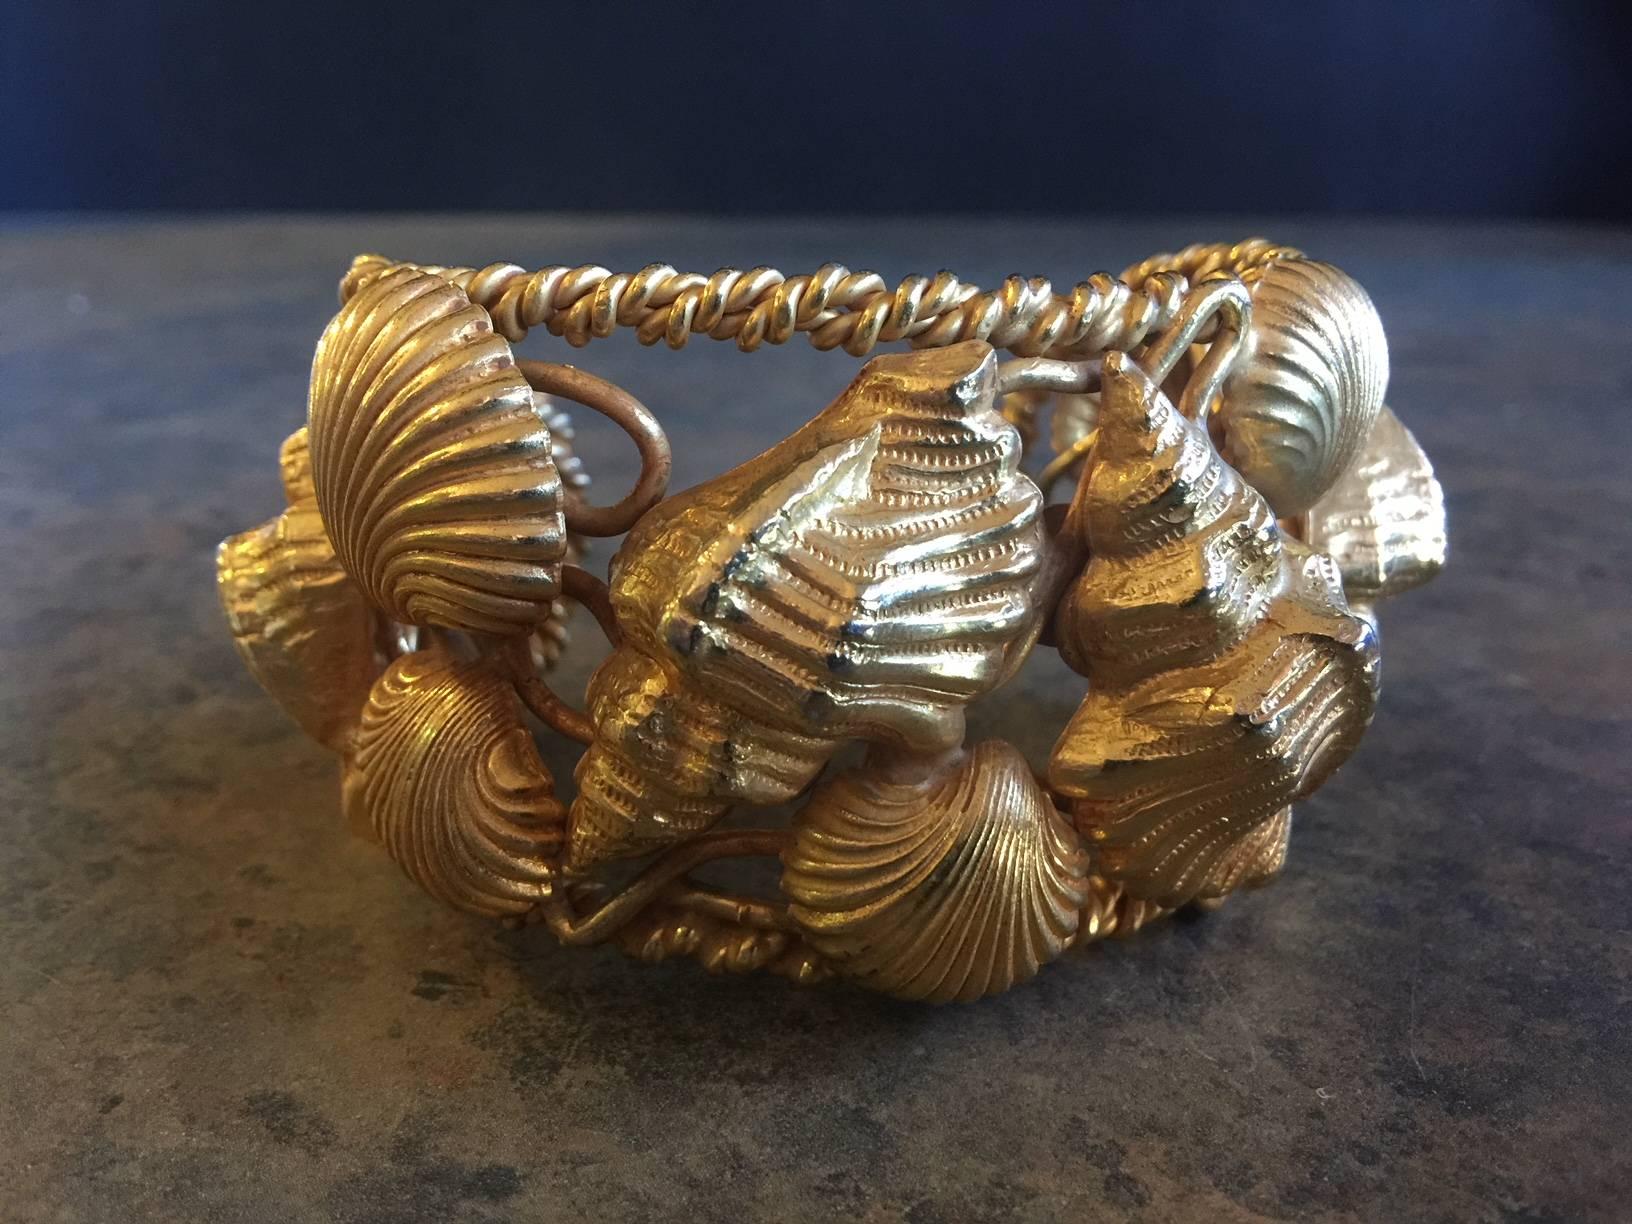 Sea Shell Cuff Bracelet in Goldtone by Dominique Aurientis of Paris For Sale 2